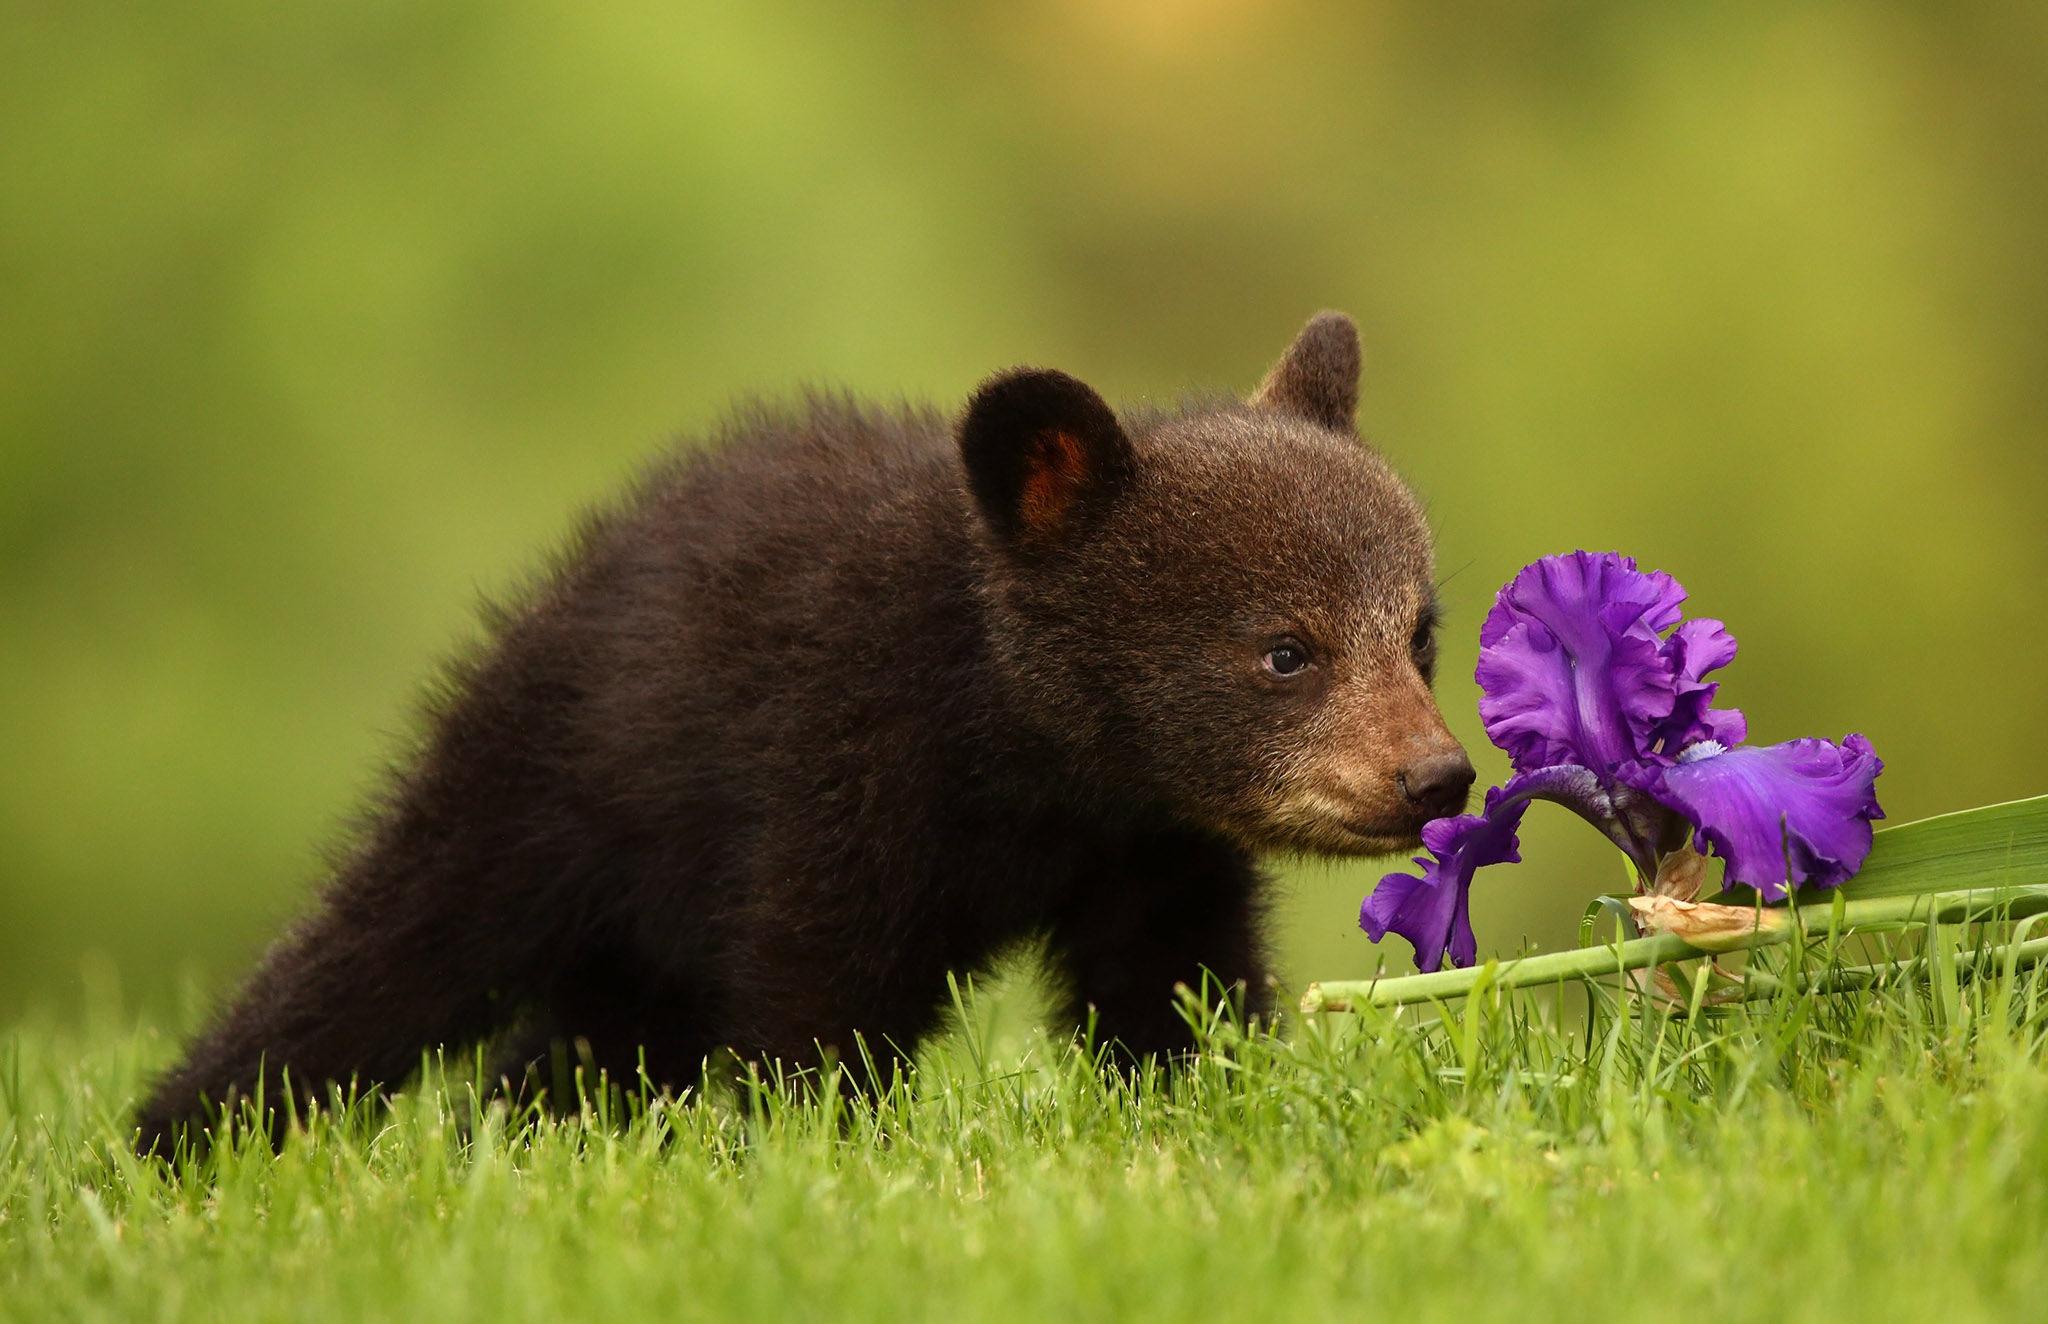 Обои ирис цветок медвежонок - бесплатные картинки на Fonwall